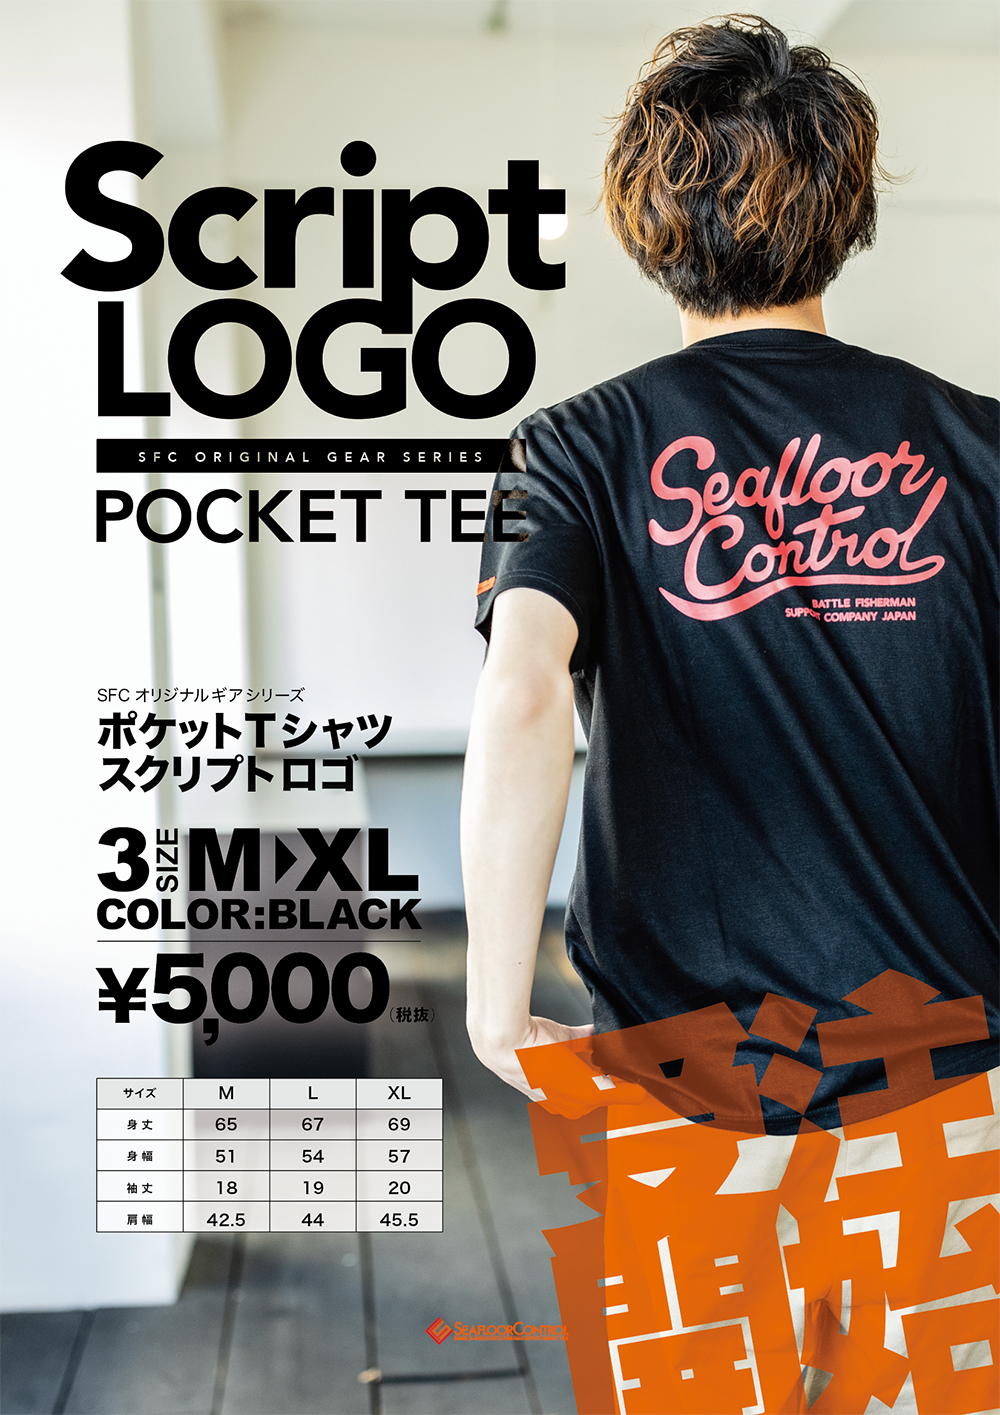 sfc pocket tee script logo ポケットTシャツ スクリプトロゴ 受注開始